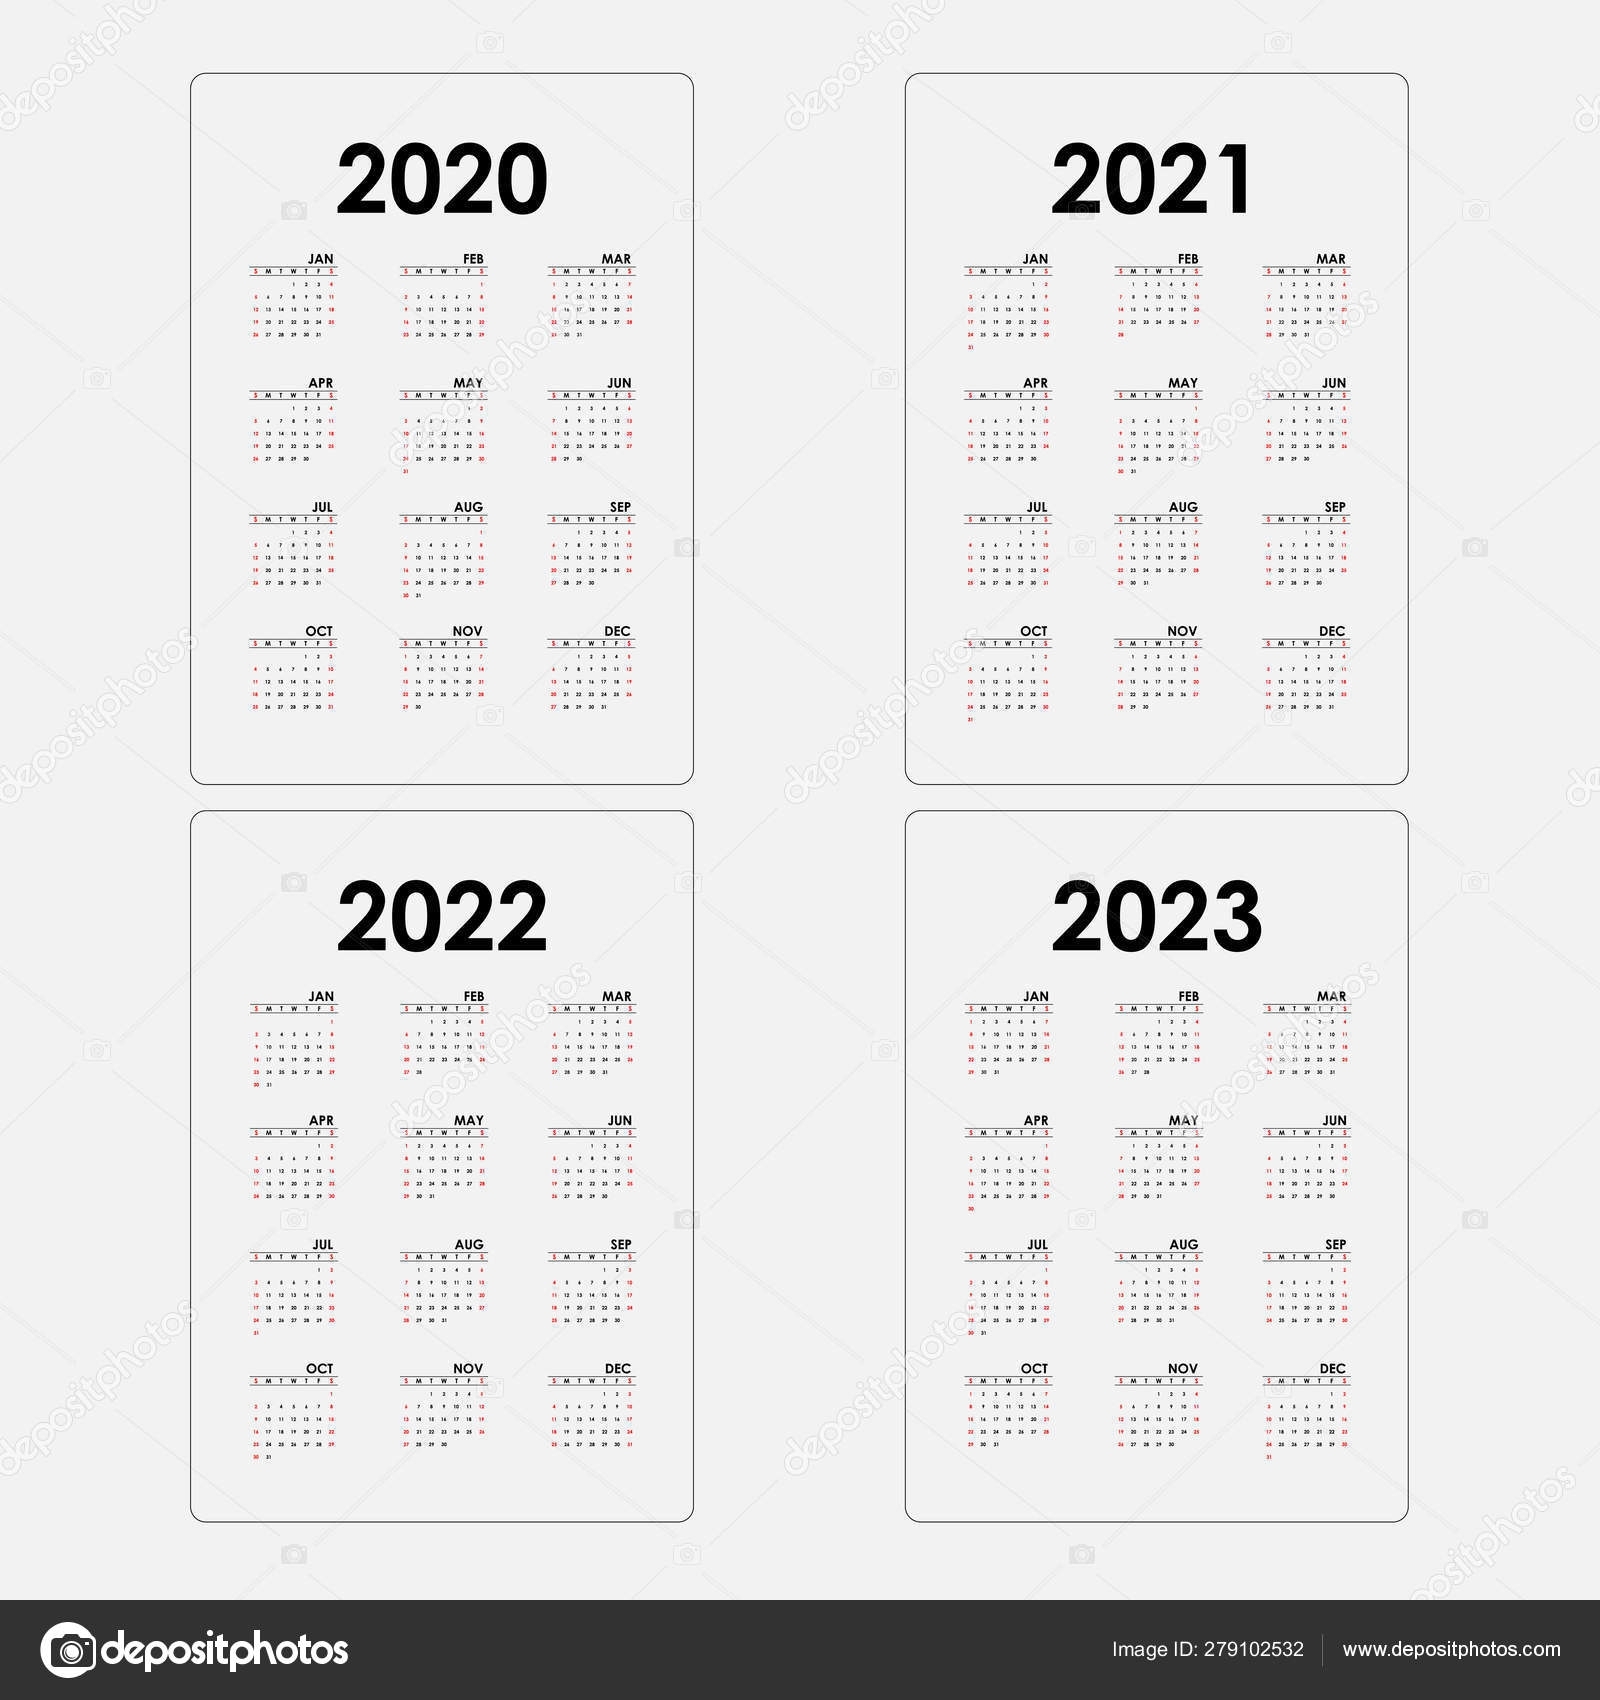 Calendar 2020, 2021,2022 And 2023 Calendar Template.yearly regarding Calendar For 2020 To 2023